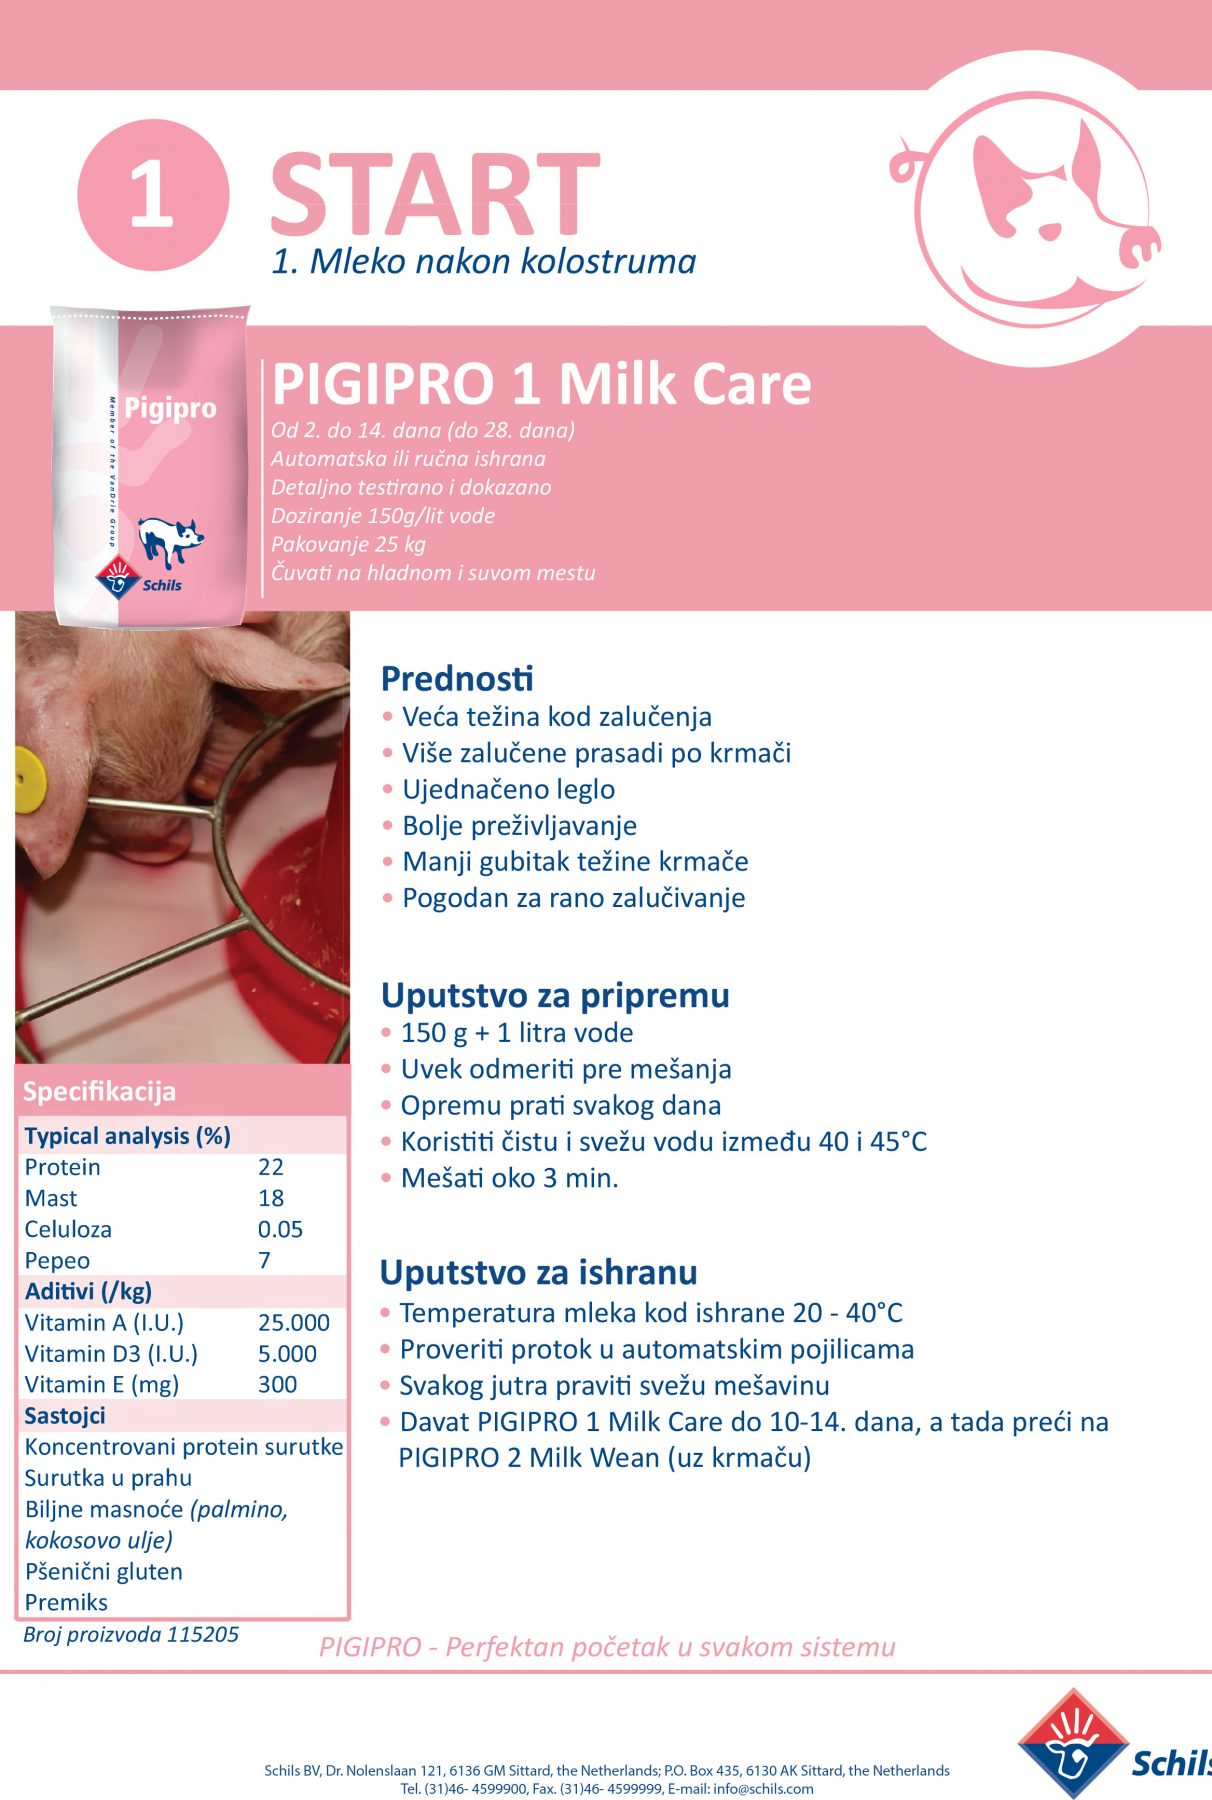 PDS_Pigipro 1 Milk Care_SRB 2016.pdf